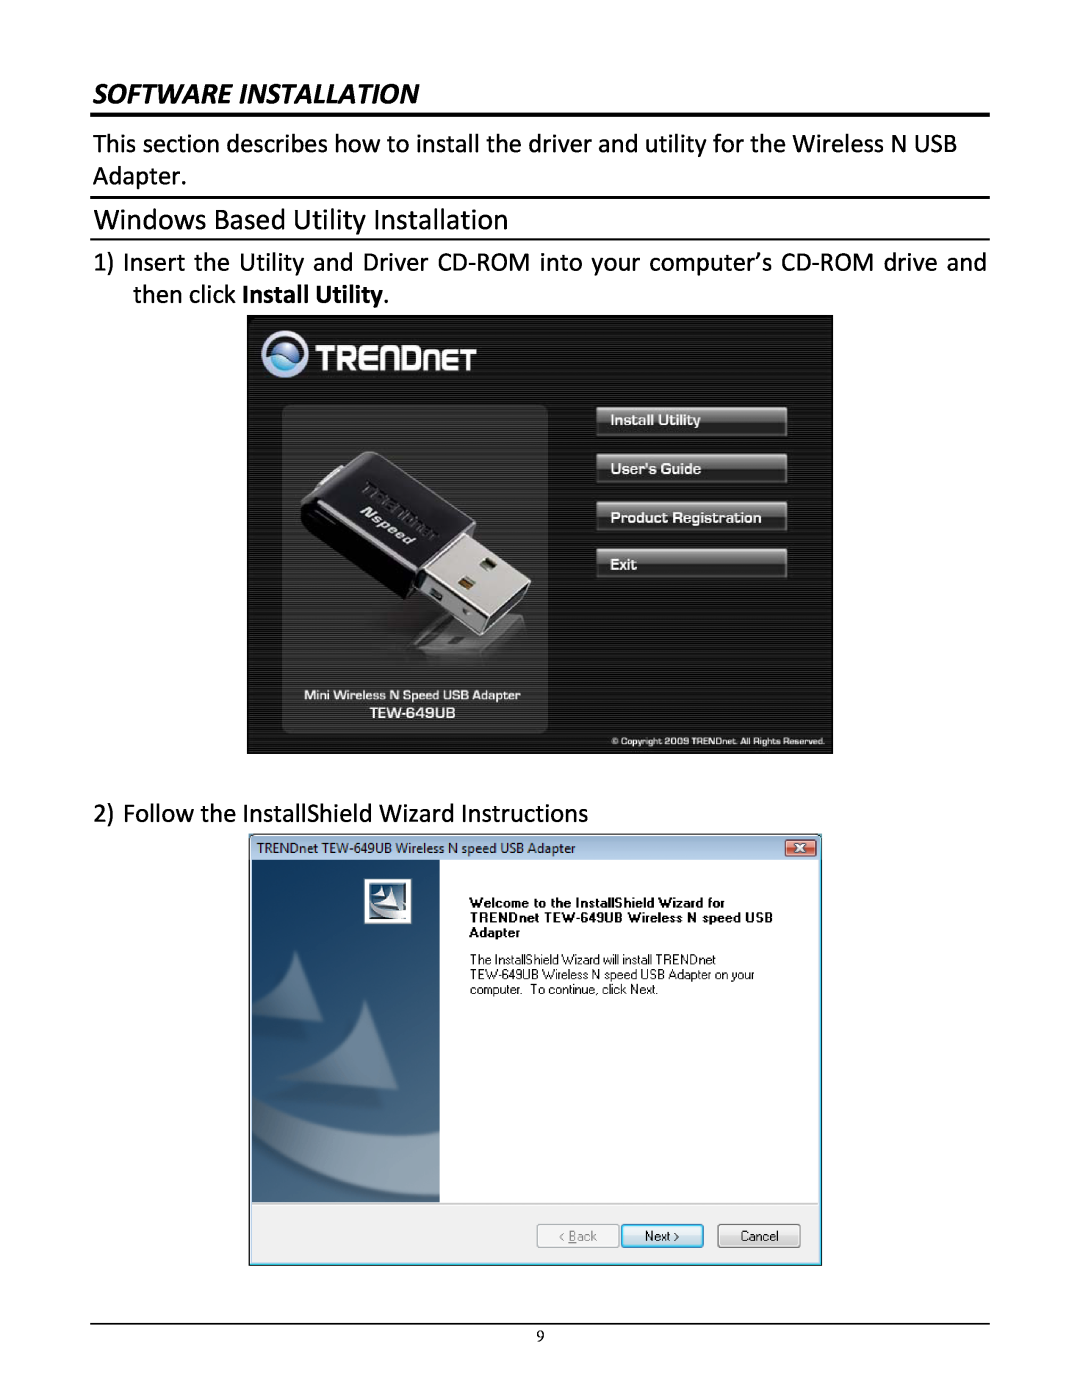 TRENDnet TEW-649UB manual Software Installation, Windows Based Utility Installation 